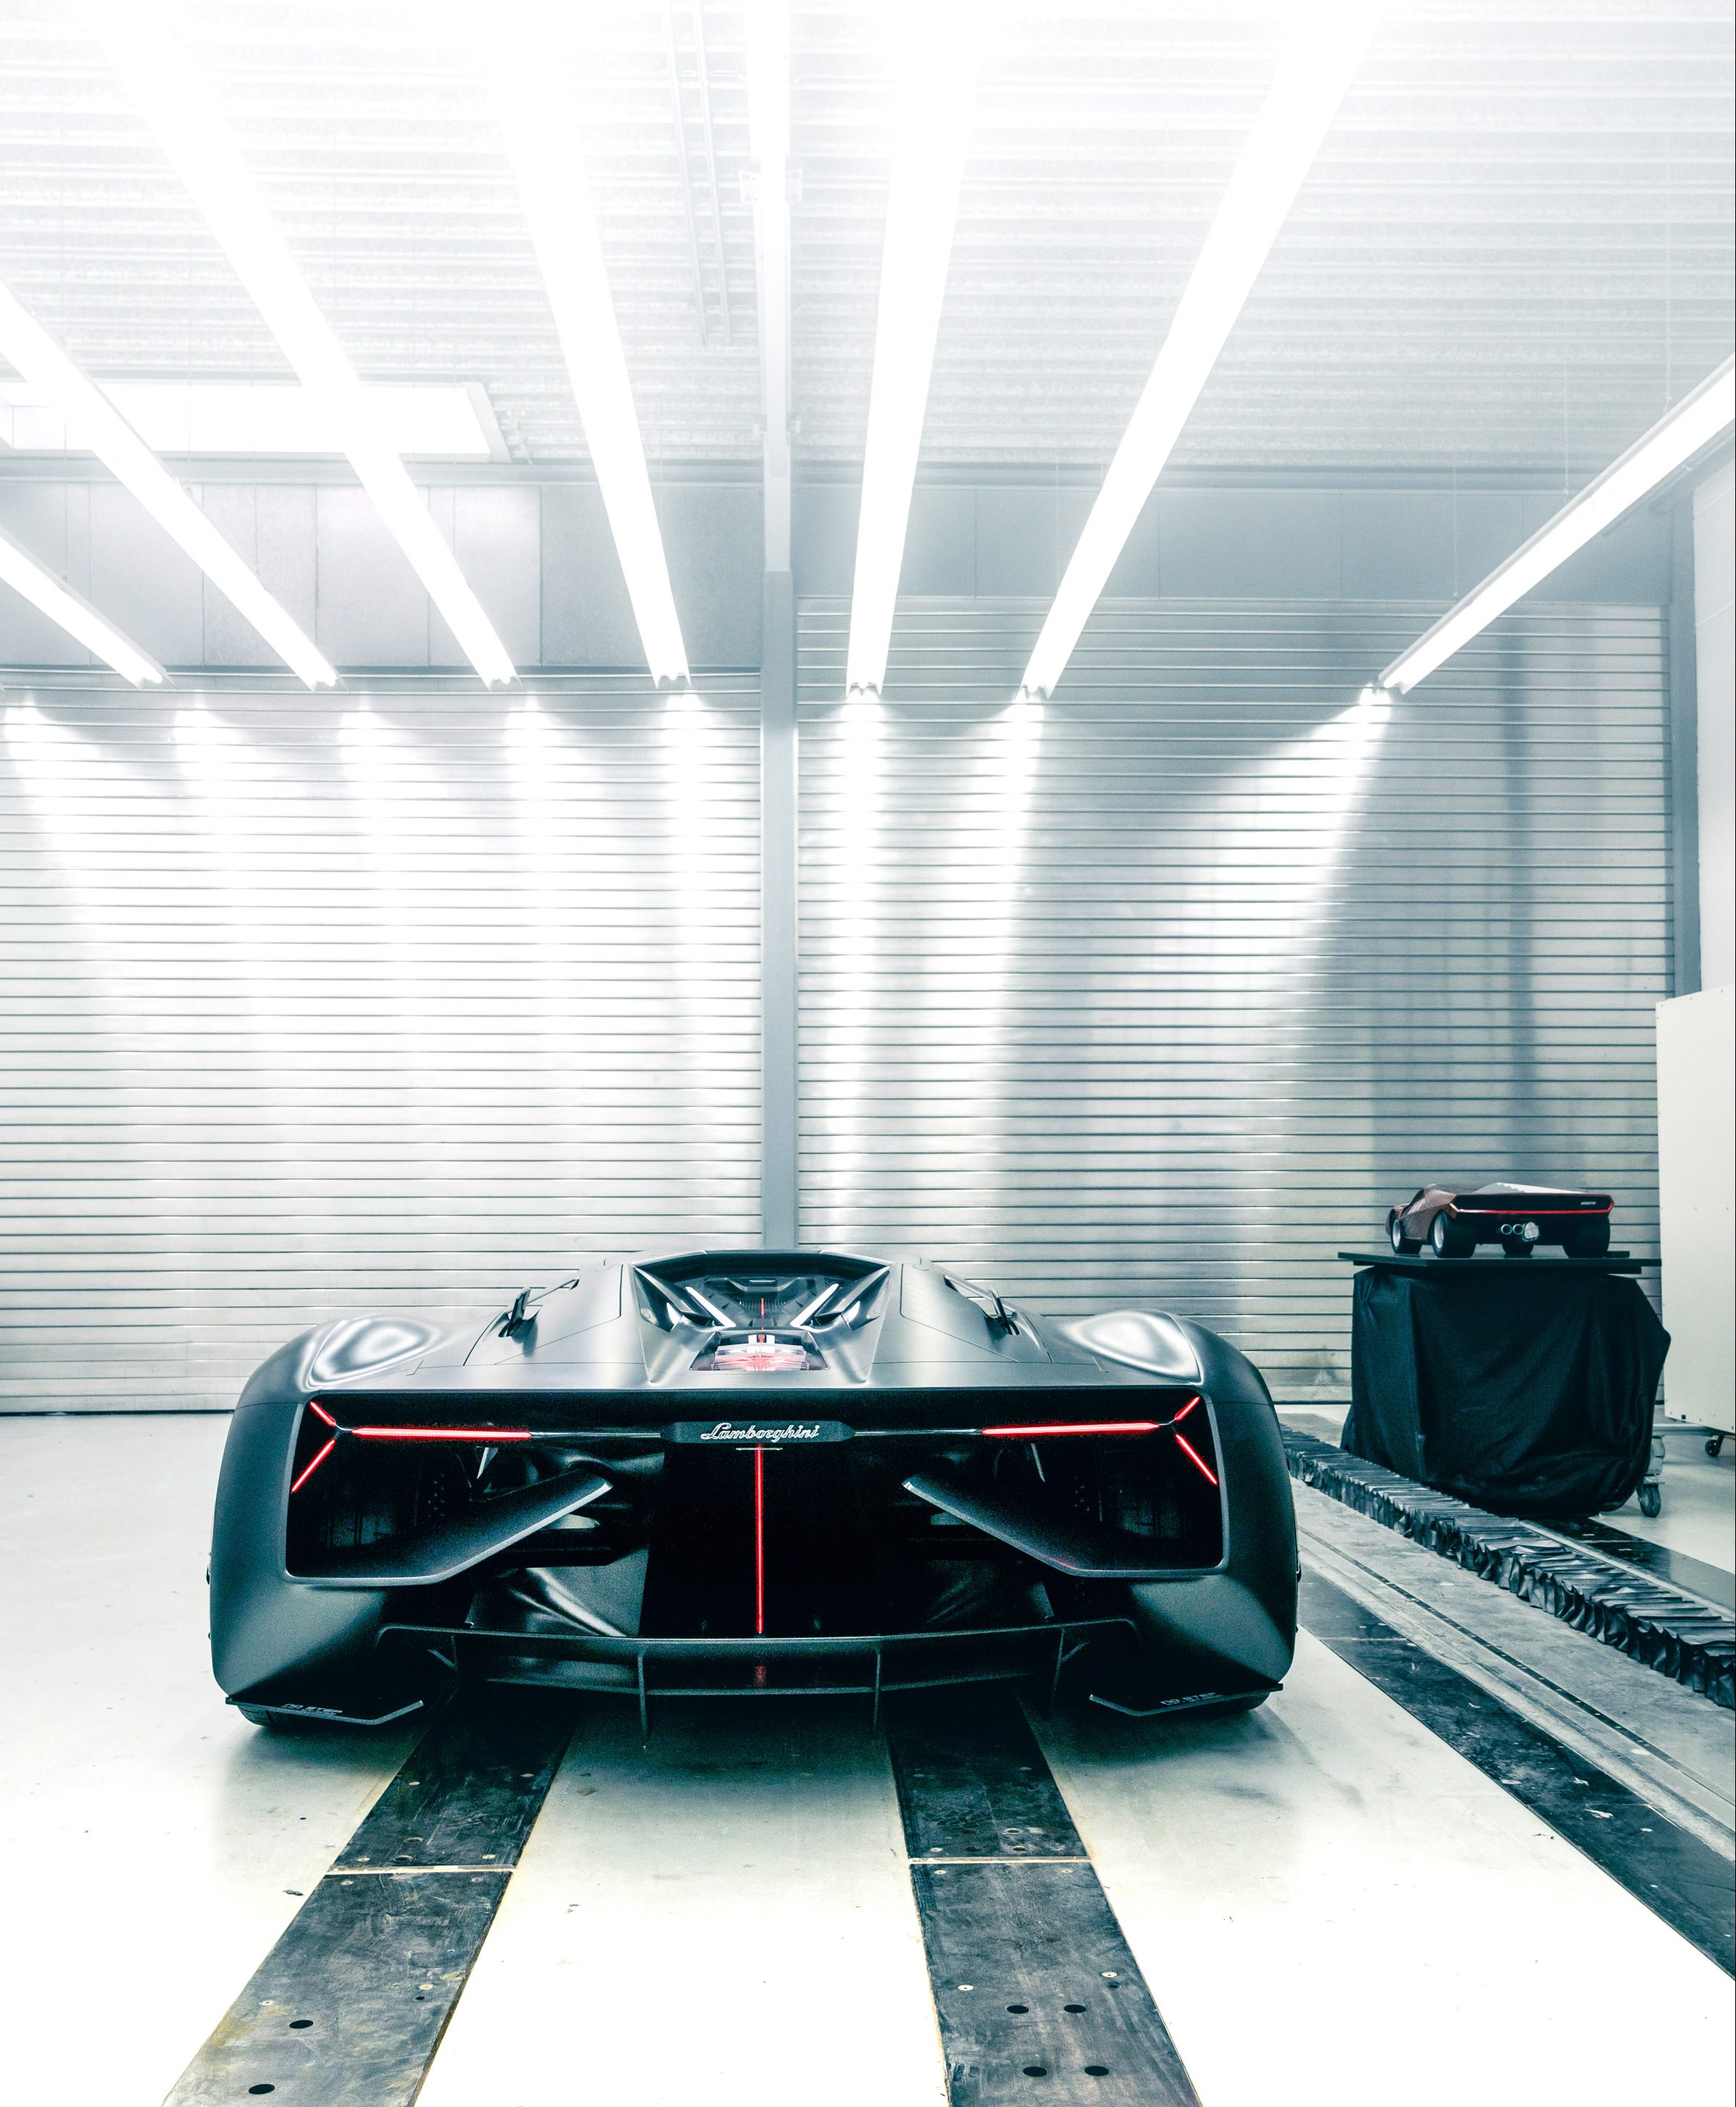 Lamborghini Terzo Millennio EV Concept Uses Energy-Storing Body Panels, News